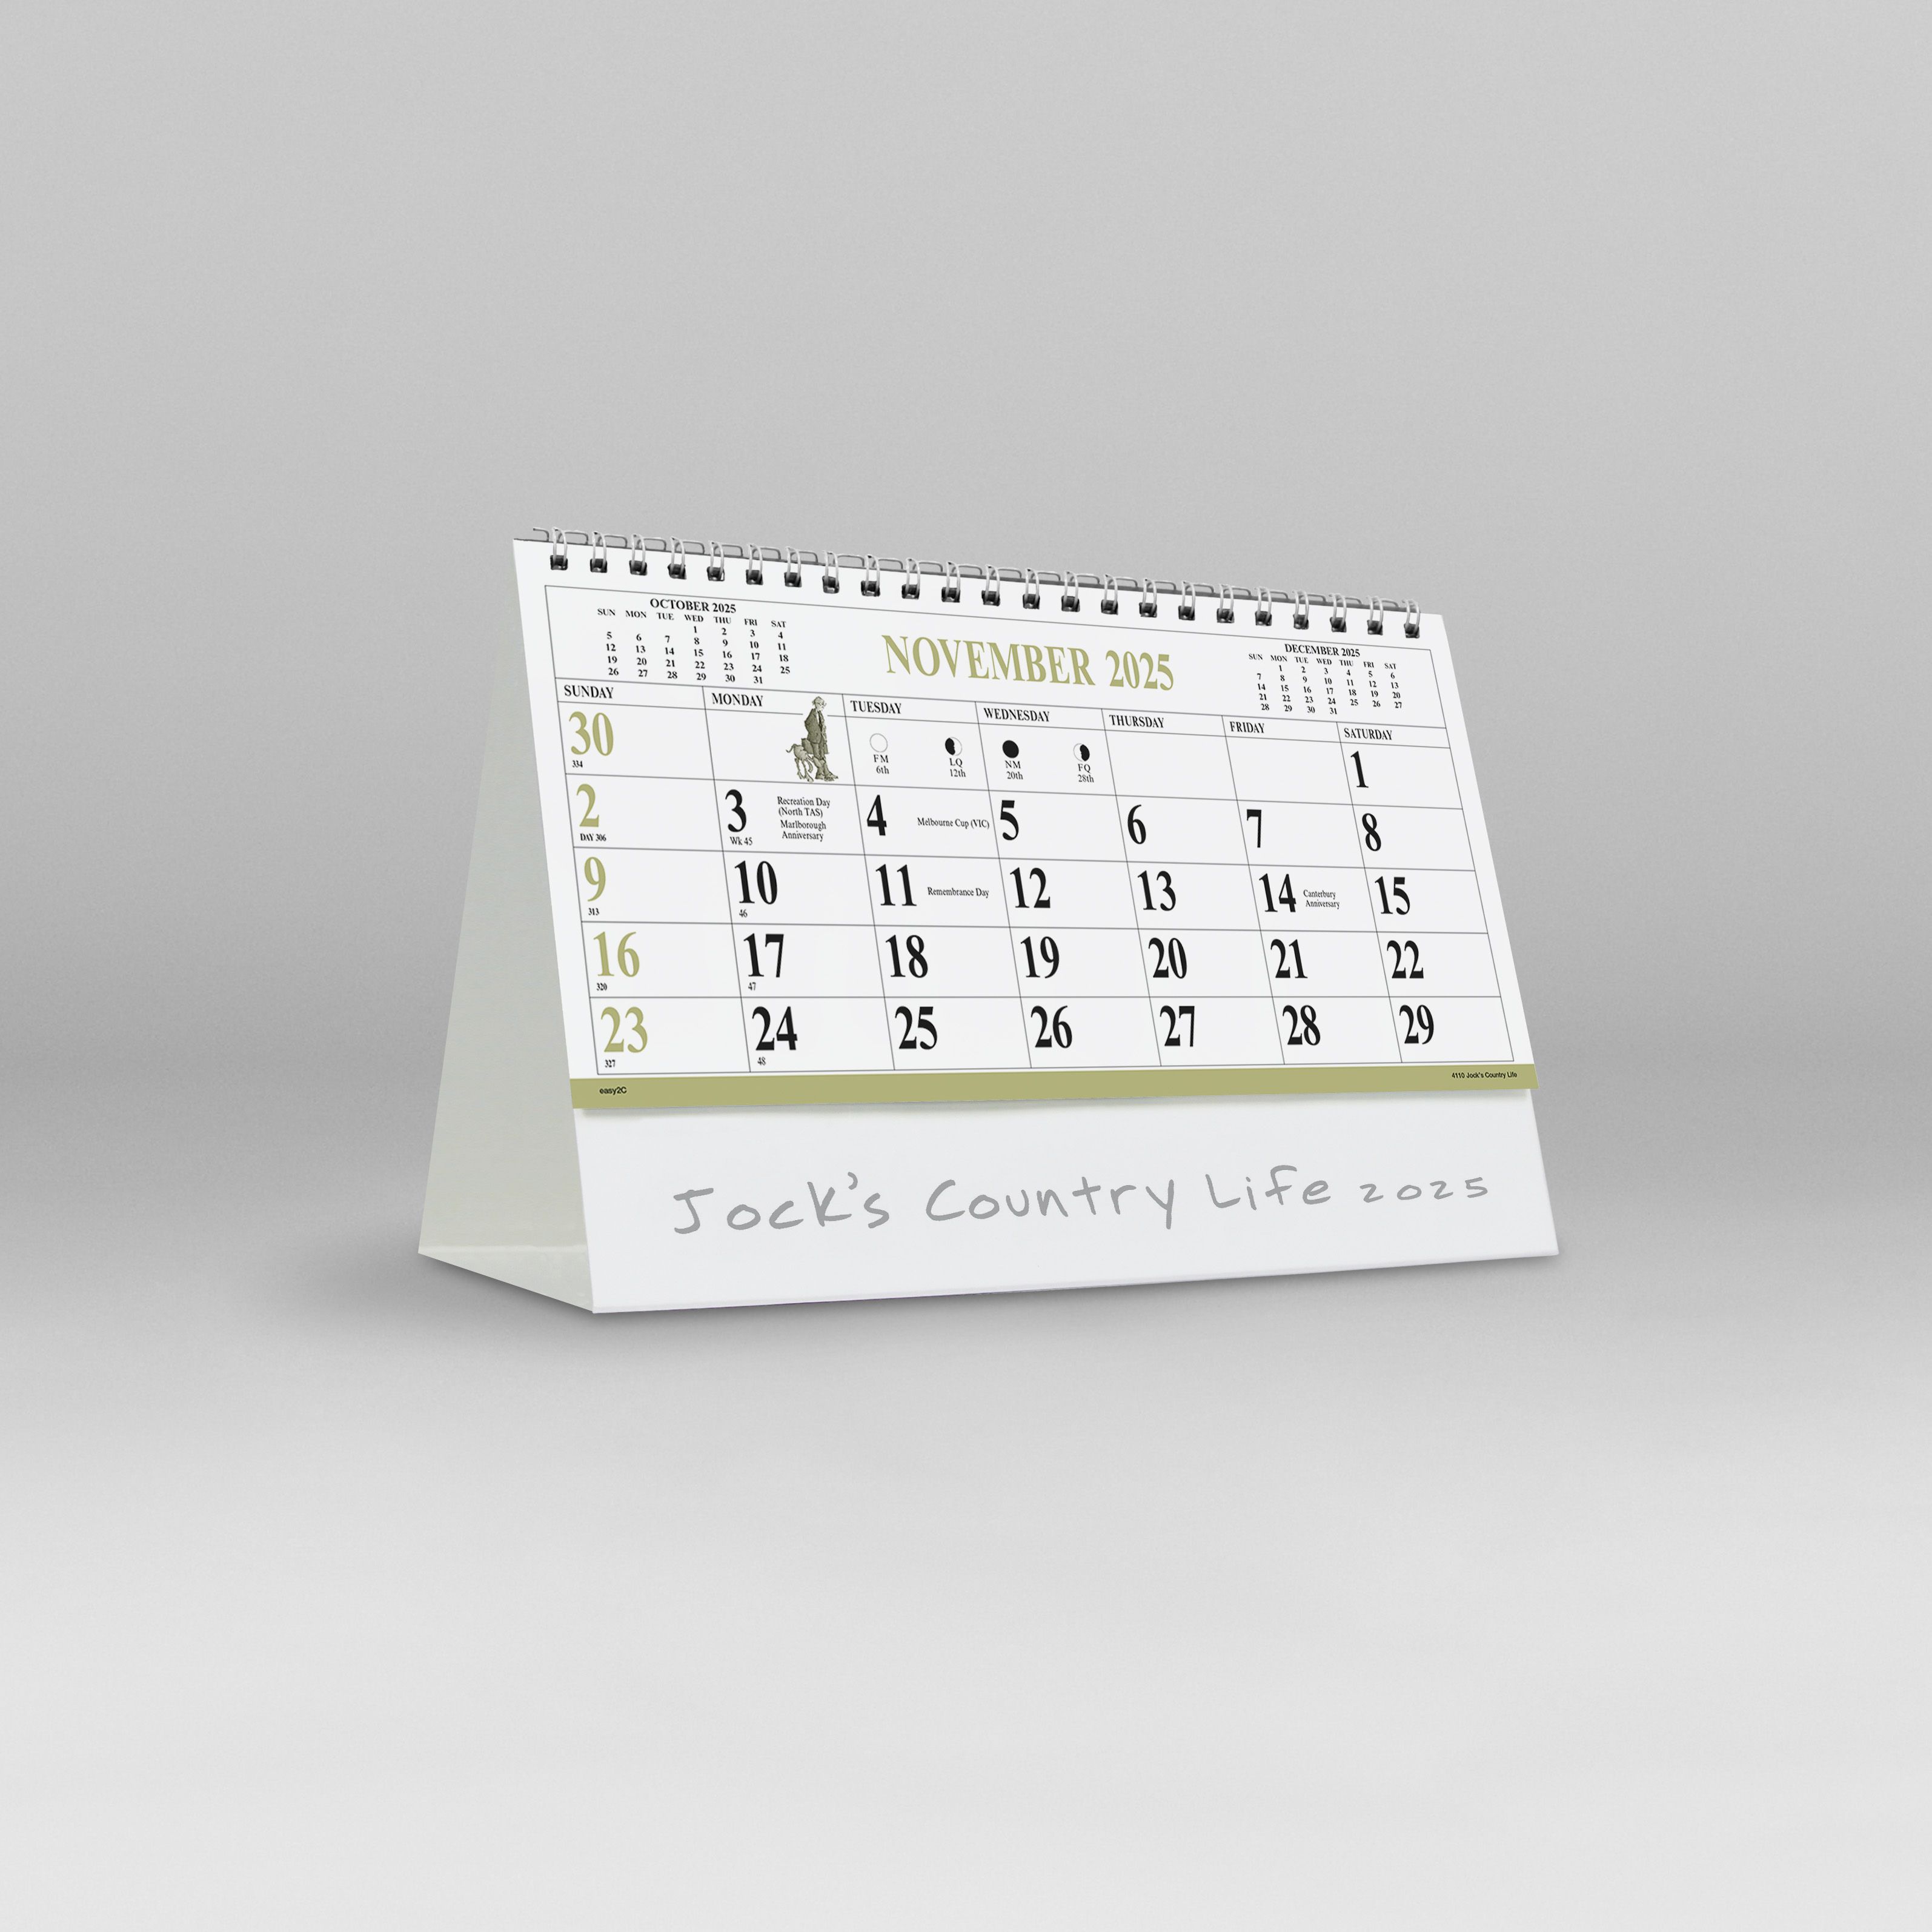 Jocks Country Life Desk retail_4203_25_21